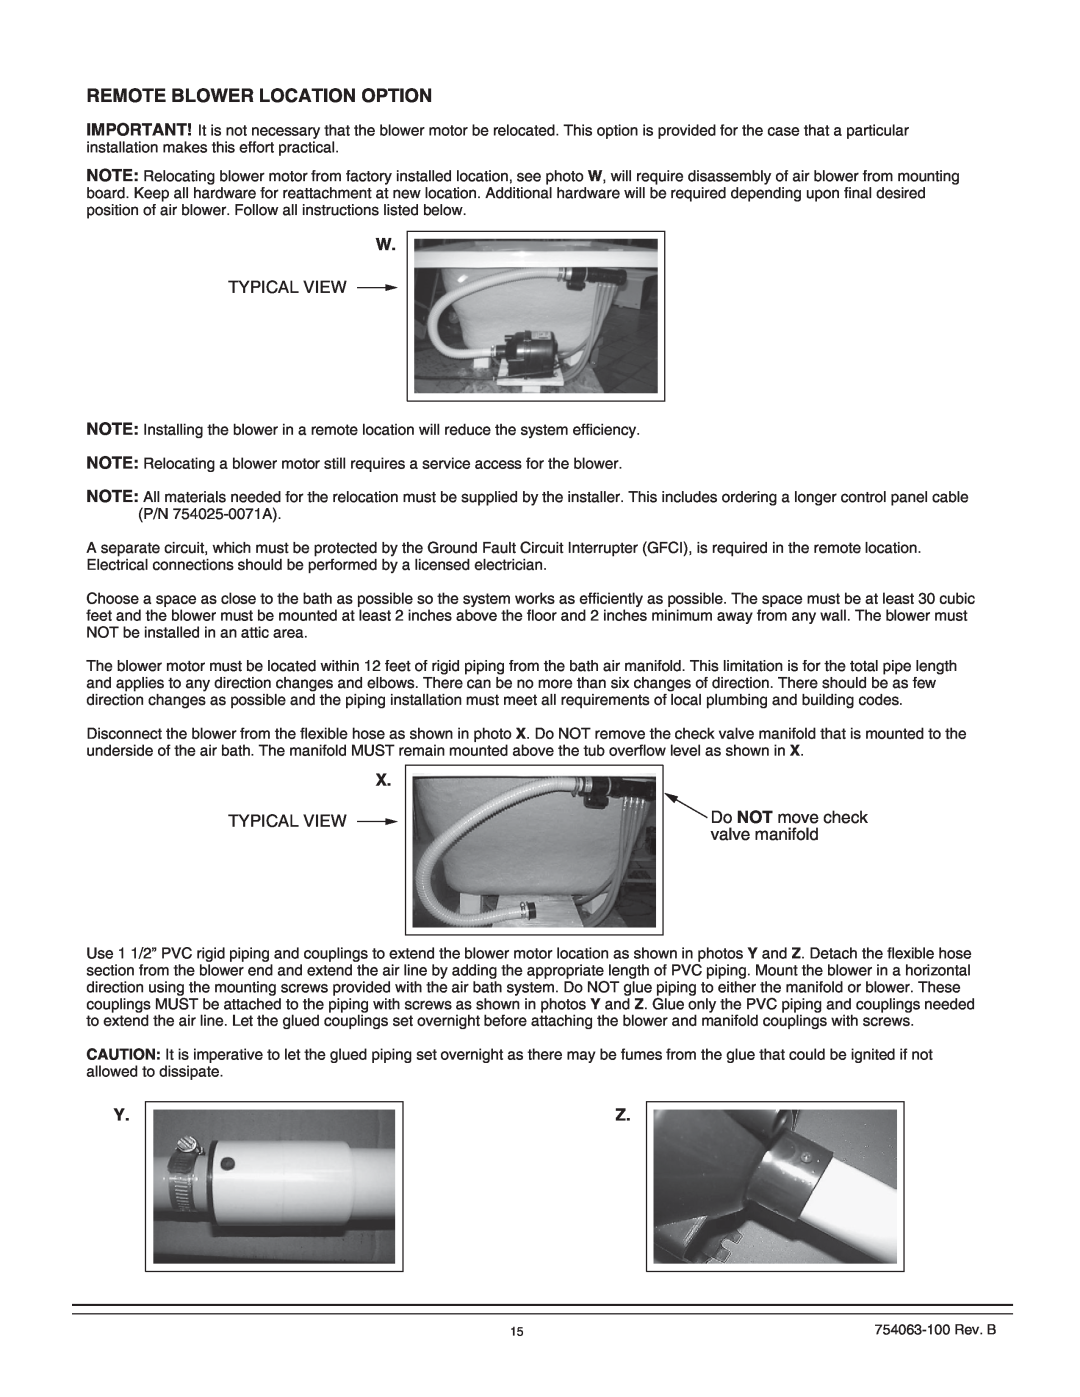 American Standard 3574, 3575, 3572 manual Remote Blower Location Option 